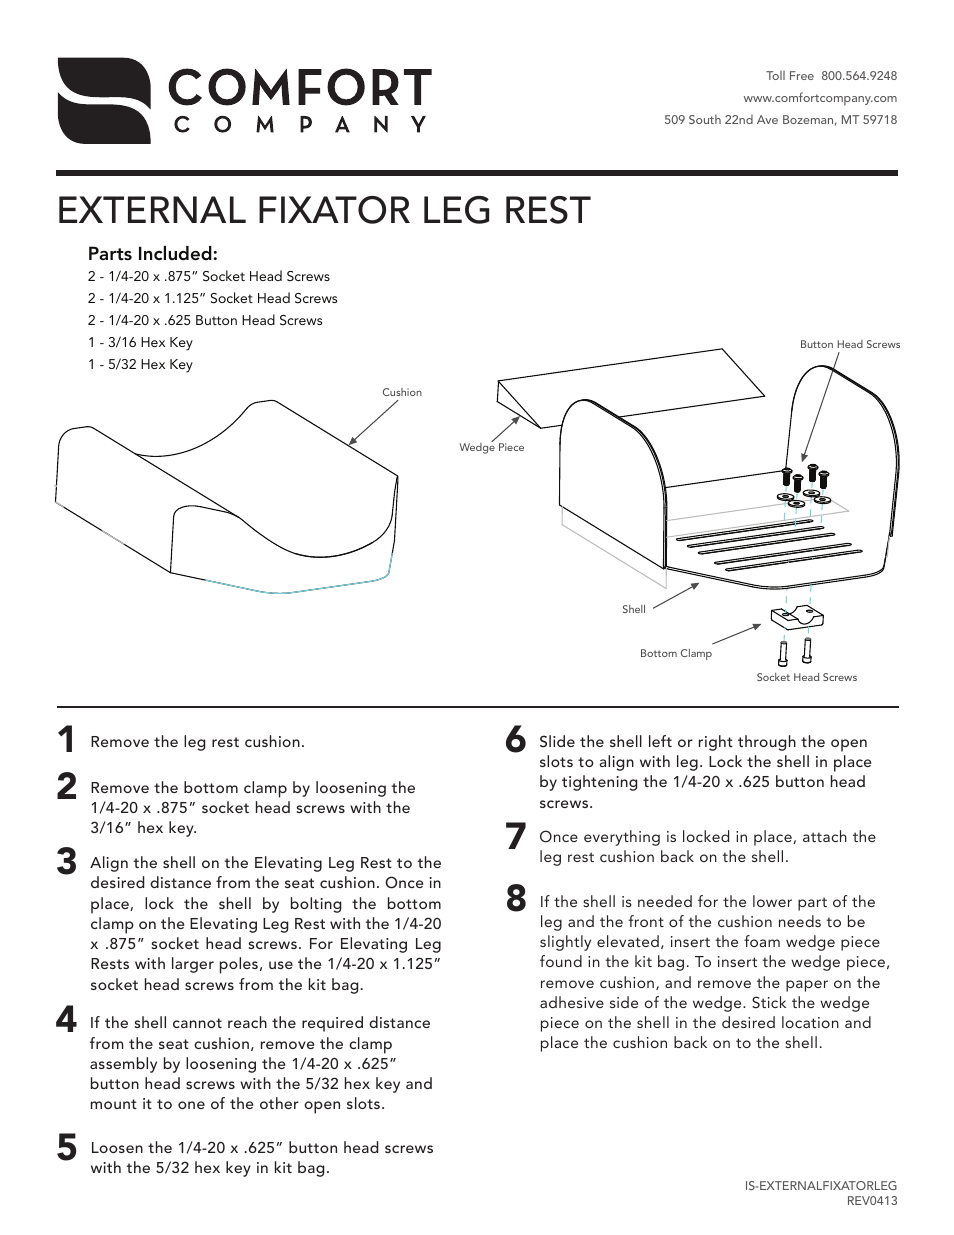 External Fixator Leg